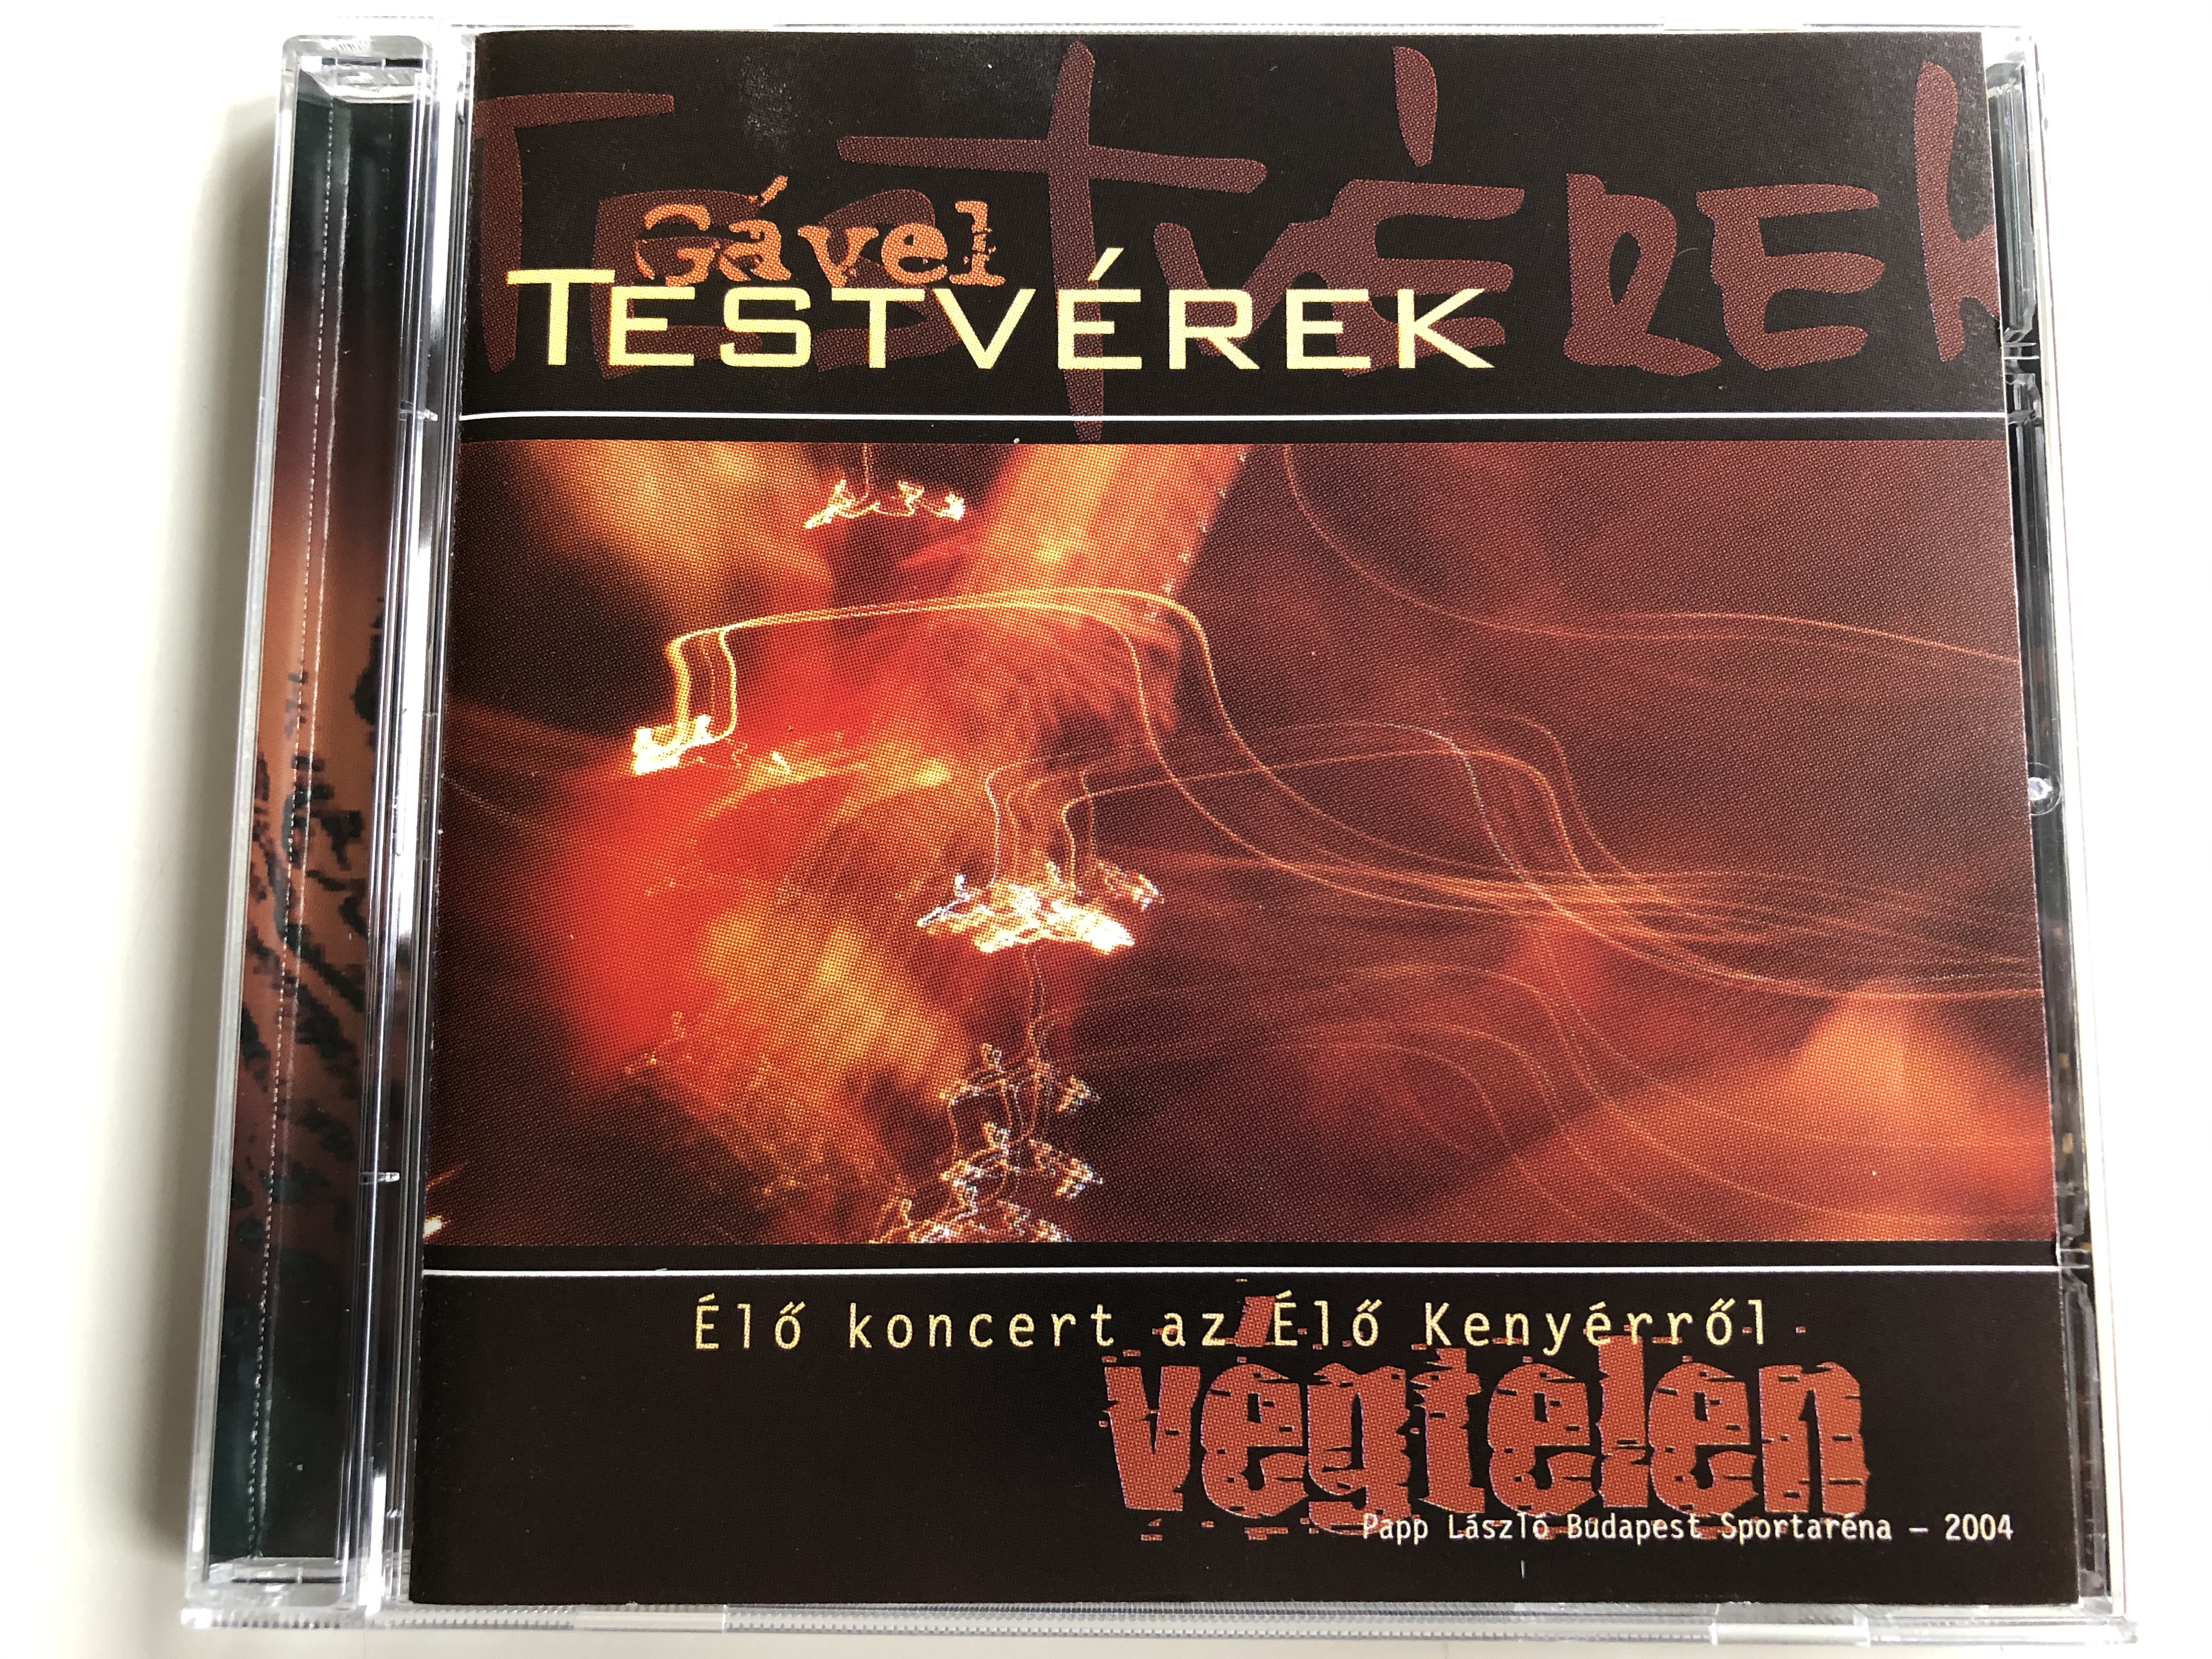 gavel-testverek-elo-koncert-az-elo-kenyerrol-vegetelen-papp-laszlo-budapest-sportarena-2004-muzik-bt.-audio-cd-2005-mzk-06-1-.jpg